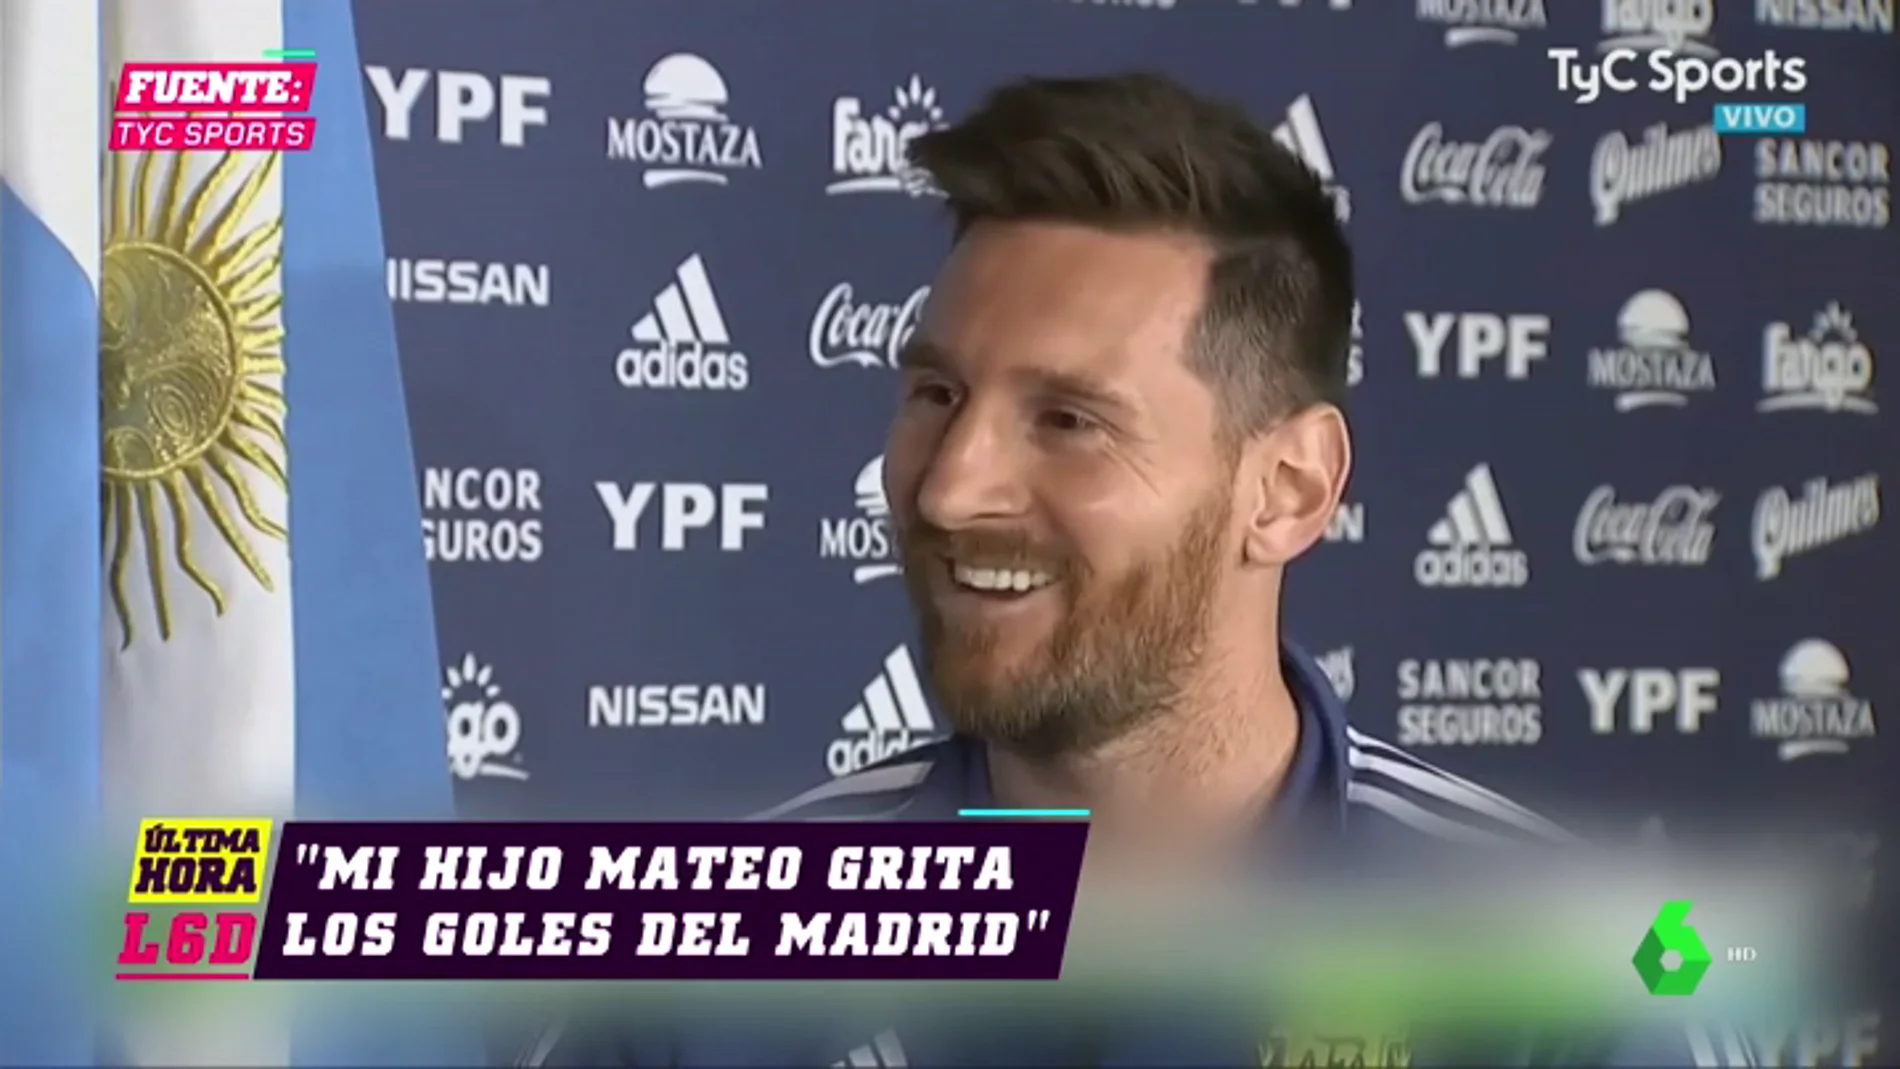 El 'troleo' del hijo de Messi: "Me dice 'yo soy del Liverpool', 'soy del Valencia', grita los goles del Madrid..."